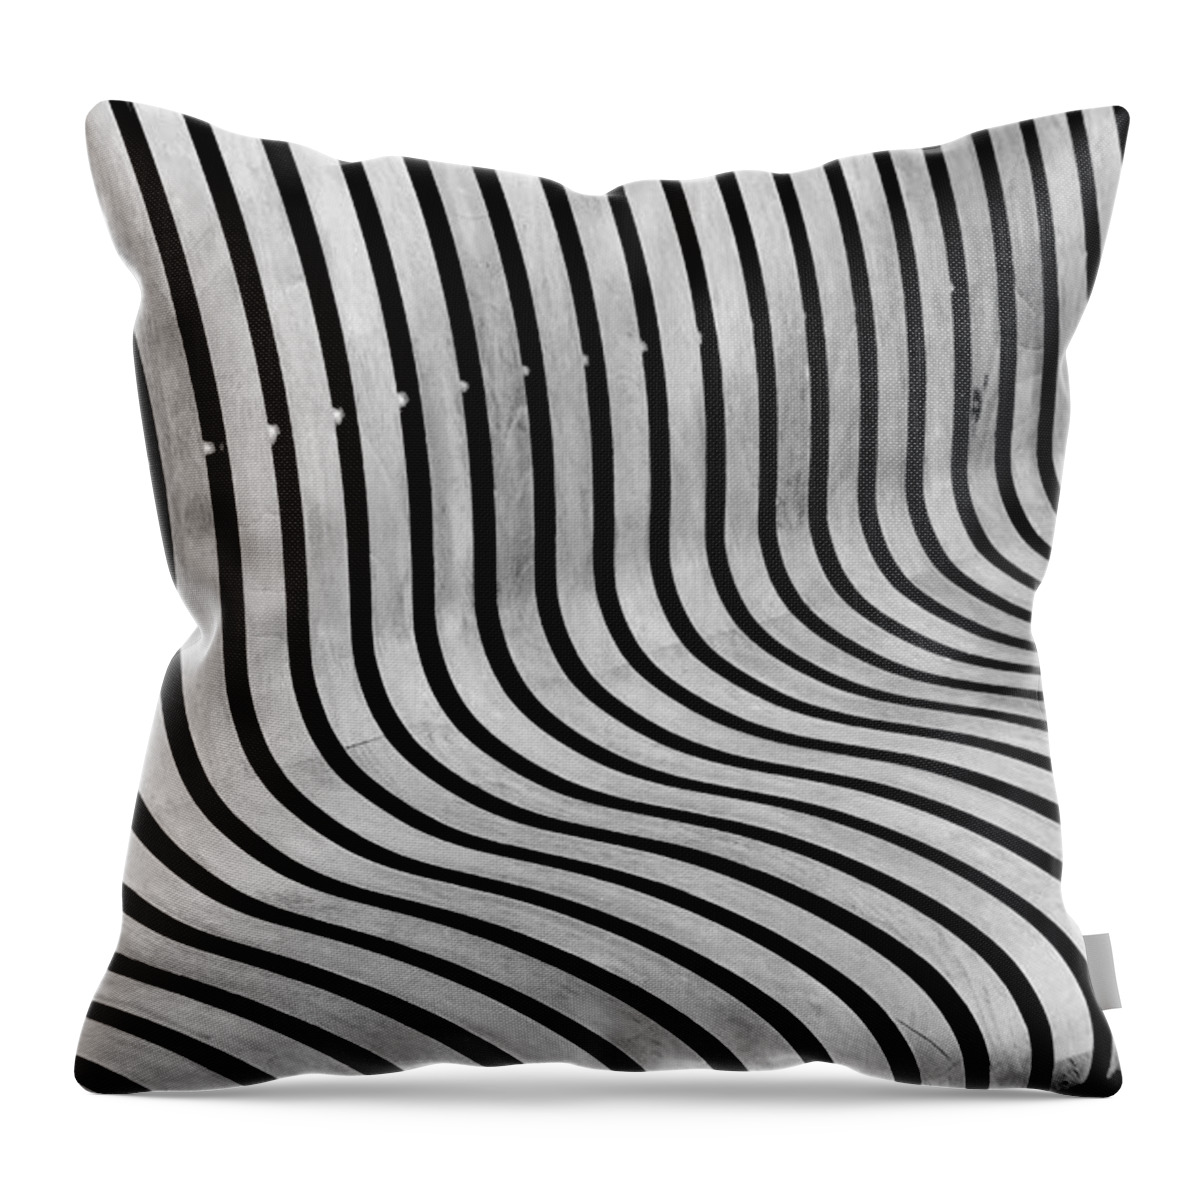 Llusion Throw Pillow featuring the photograph Eye Ride - Illusion by Deborah Crew-Johnson